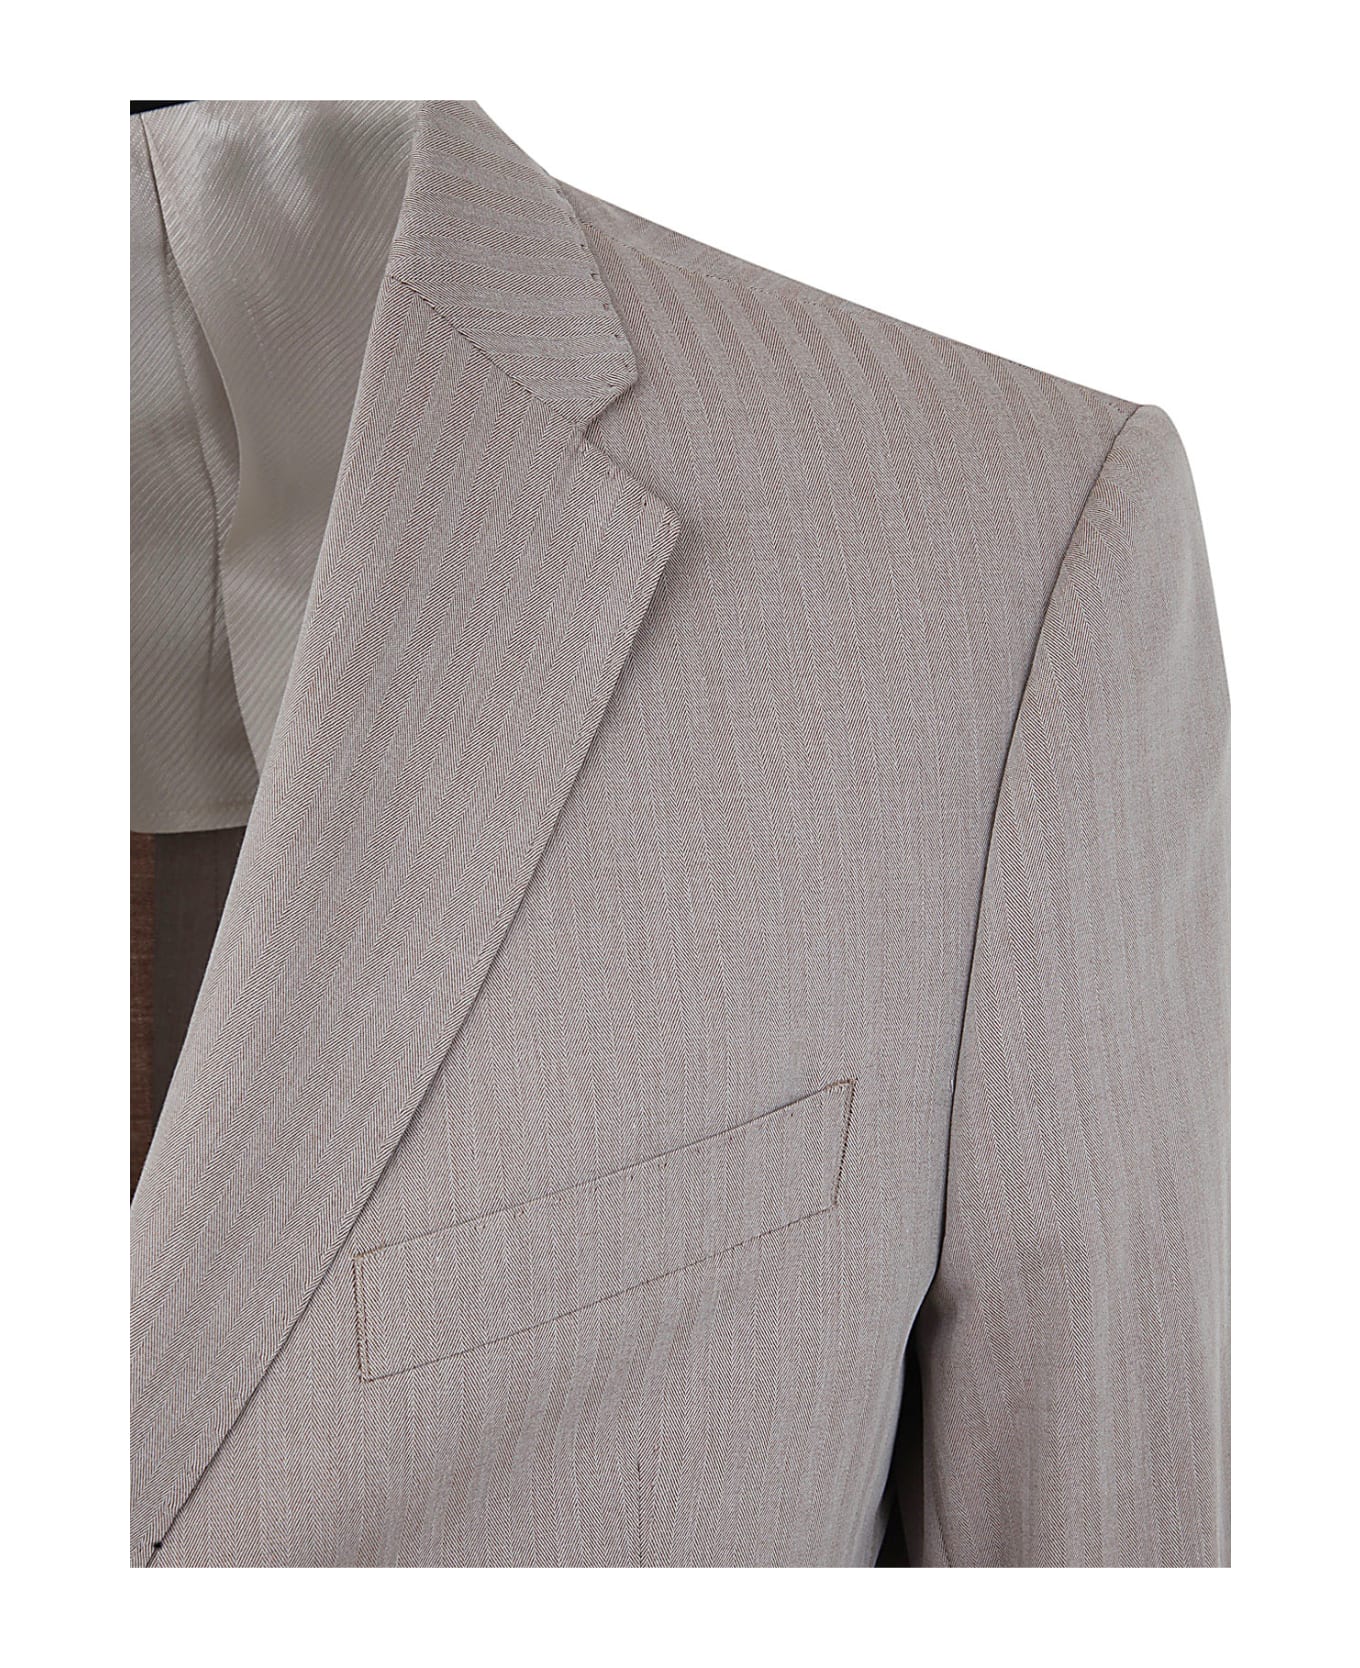 Emporio Armani Suit - Beige スーツ